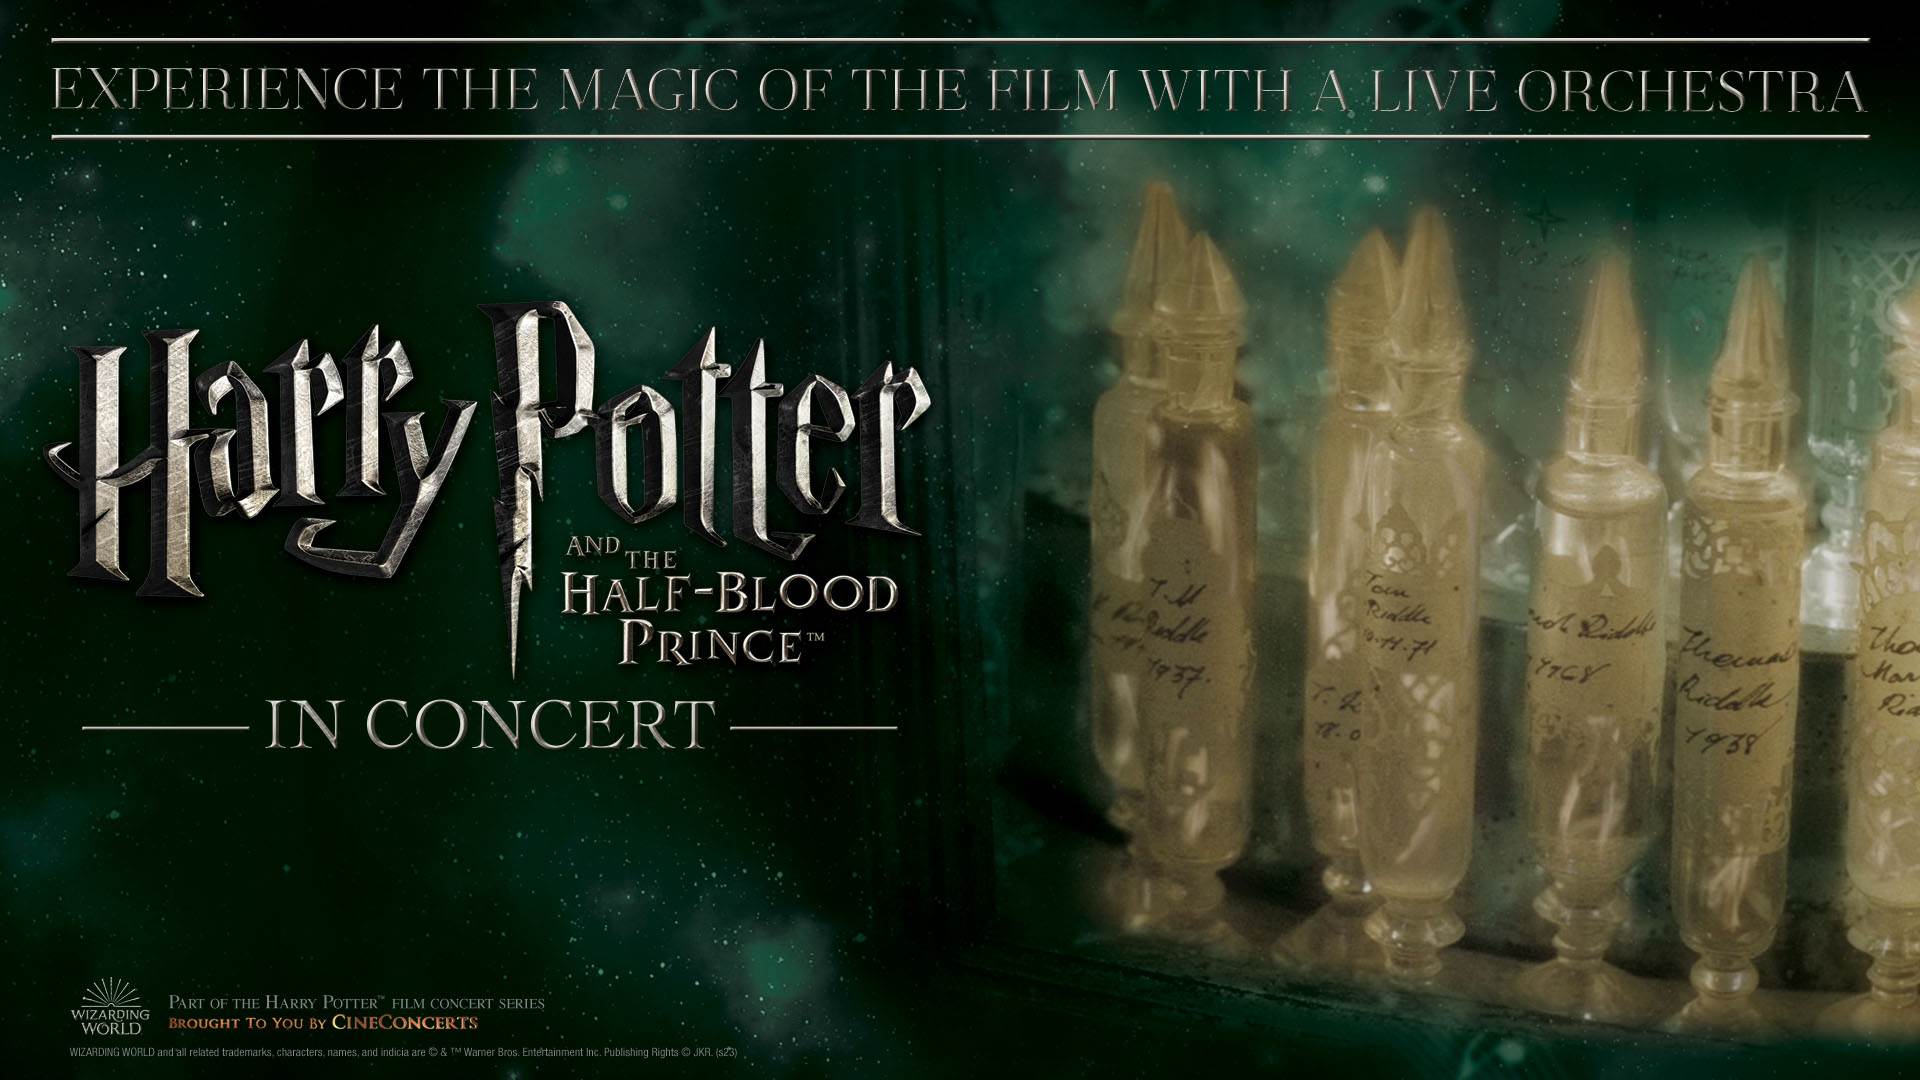 Harry Potter Eras Tour Poster - Purpul Pop